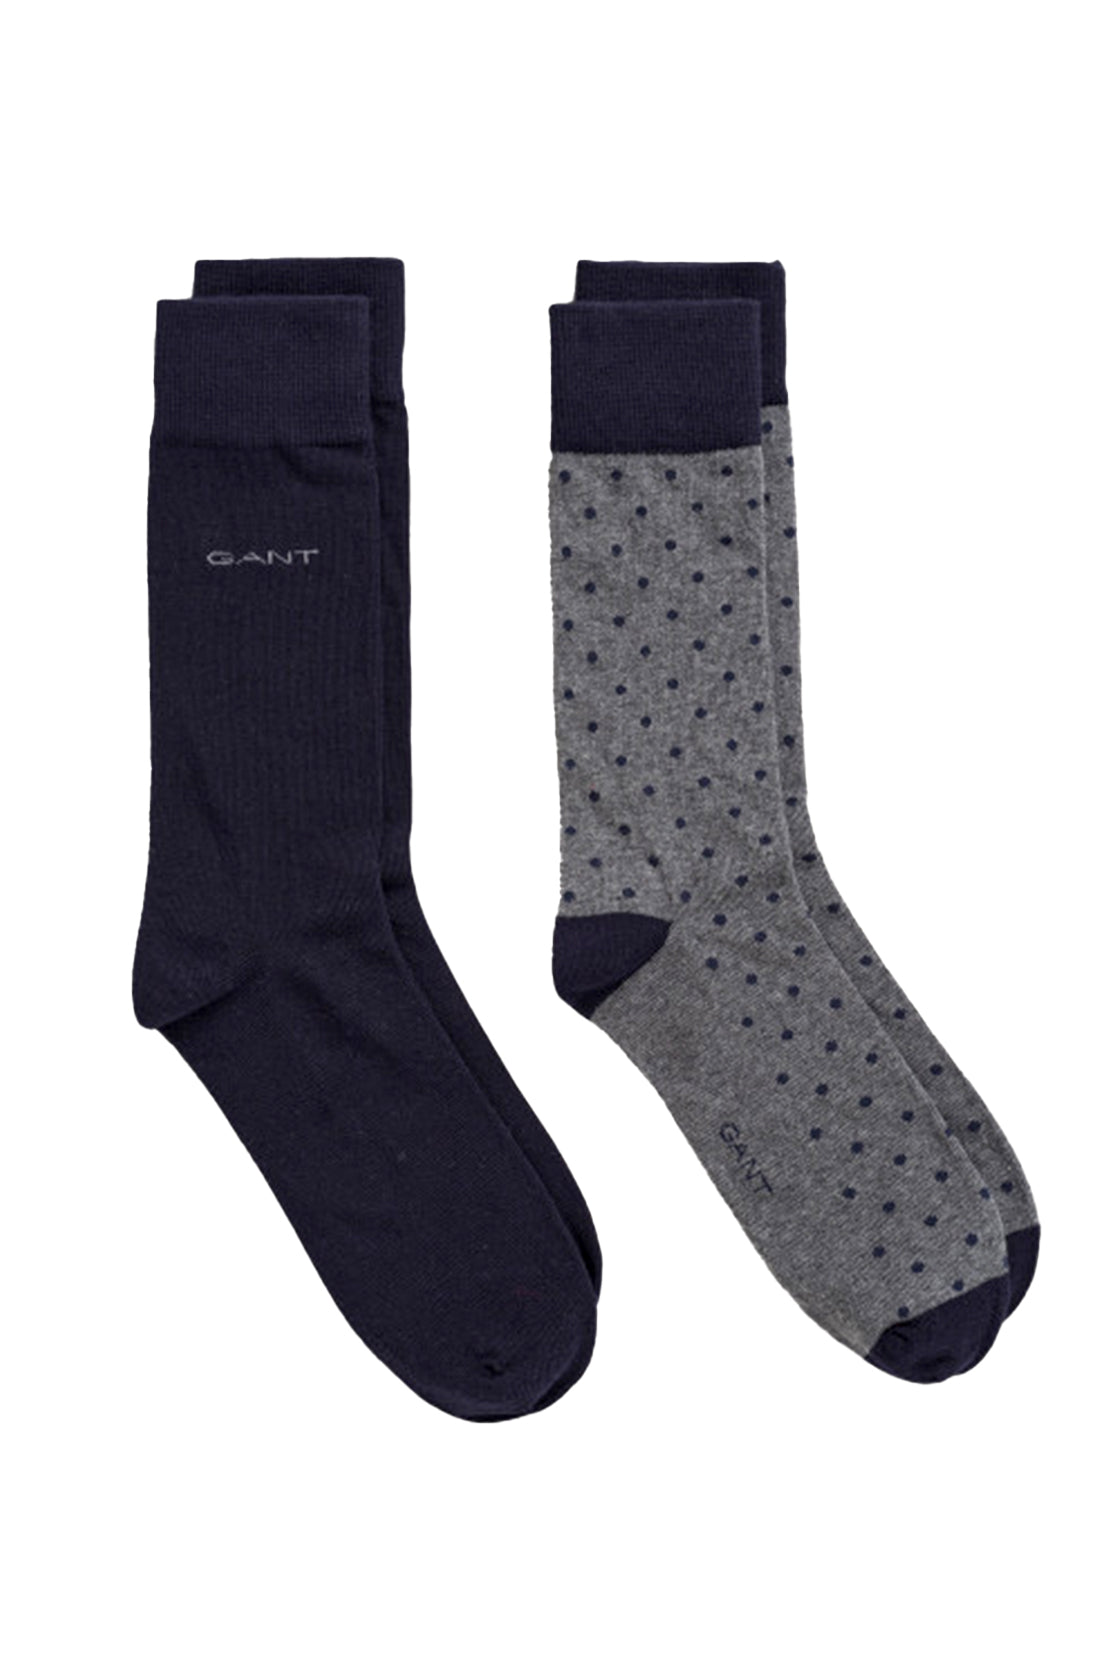 Gant Solid & Dot Socks 2PK Charcoal Melange